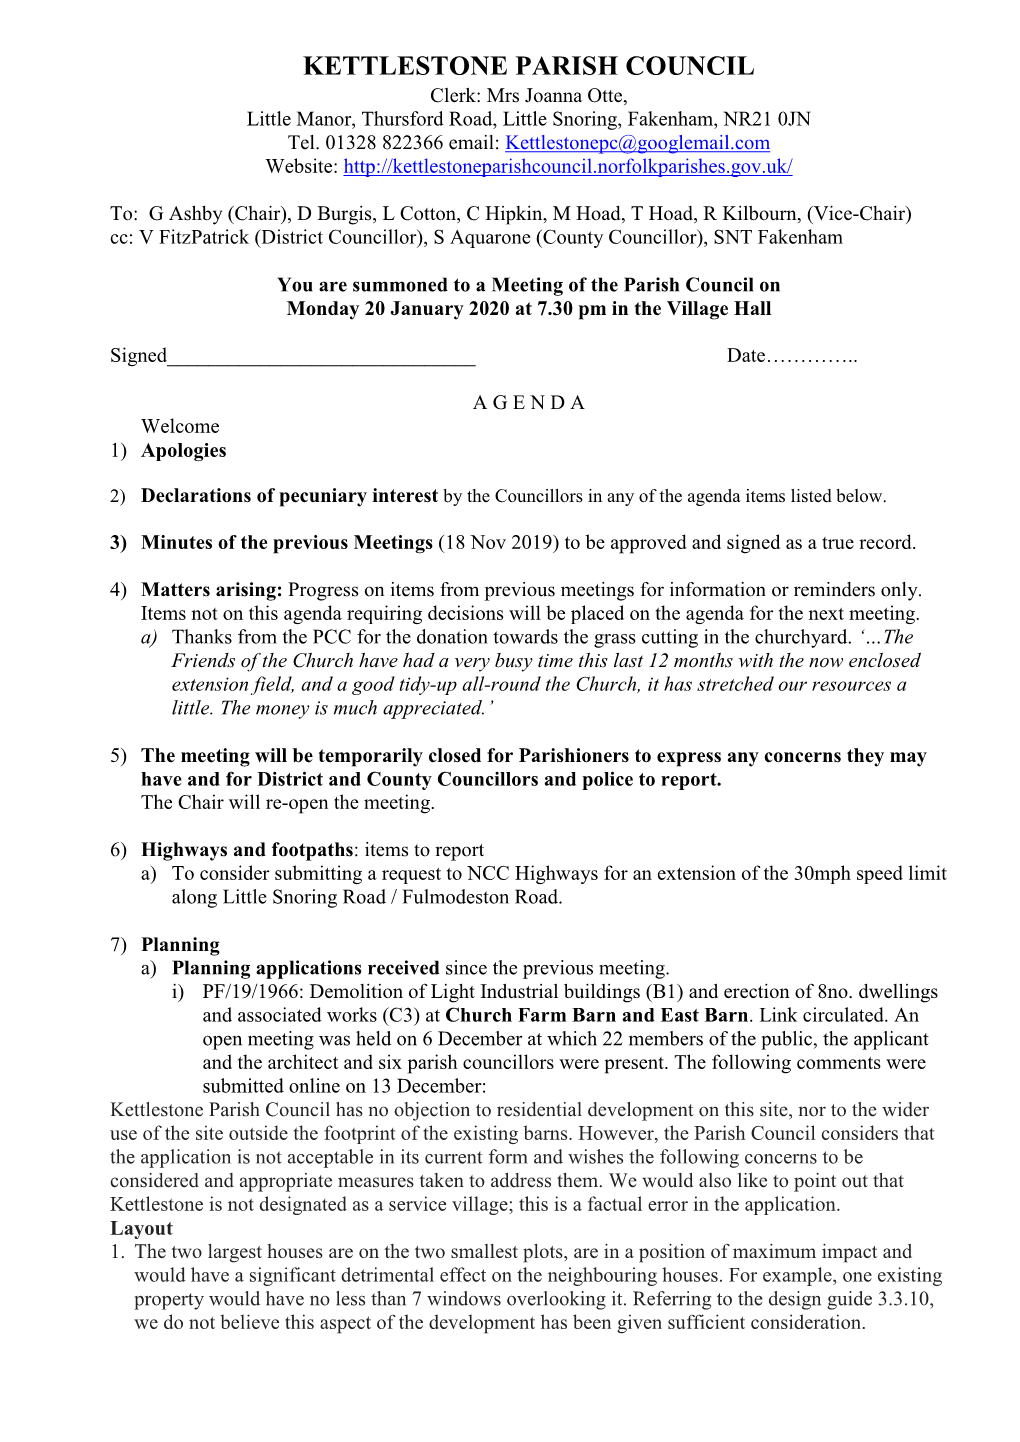 Kettlestone Parish Council Agenda January 2020